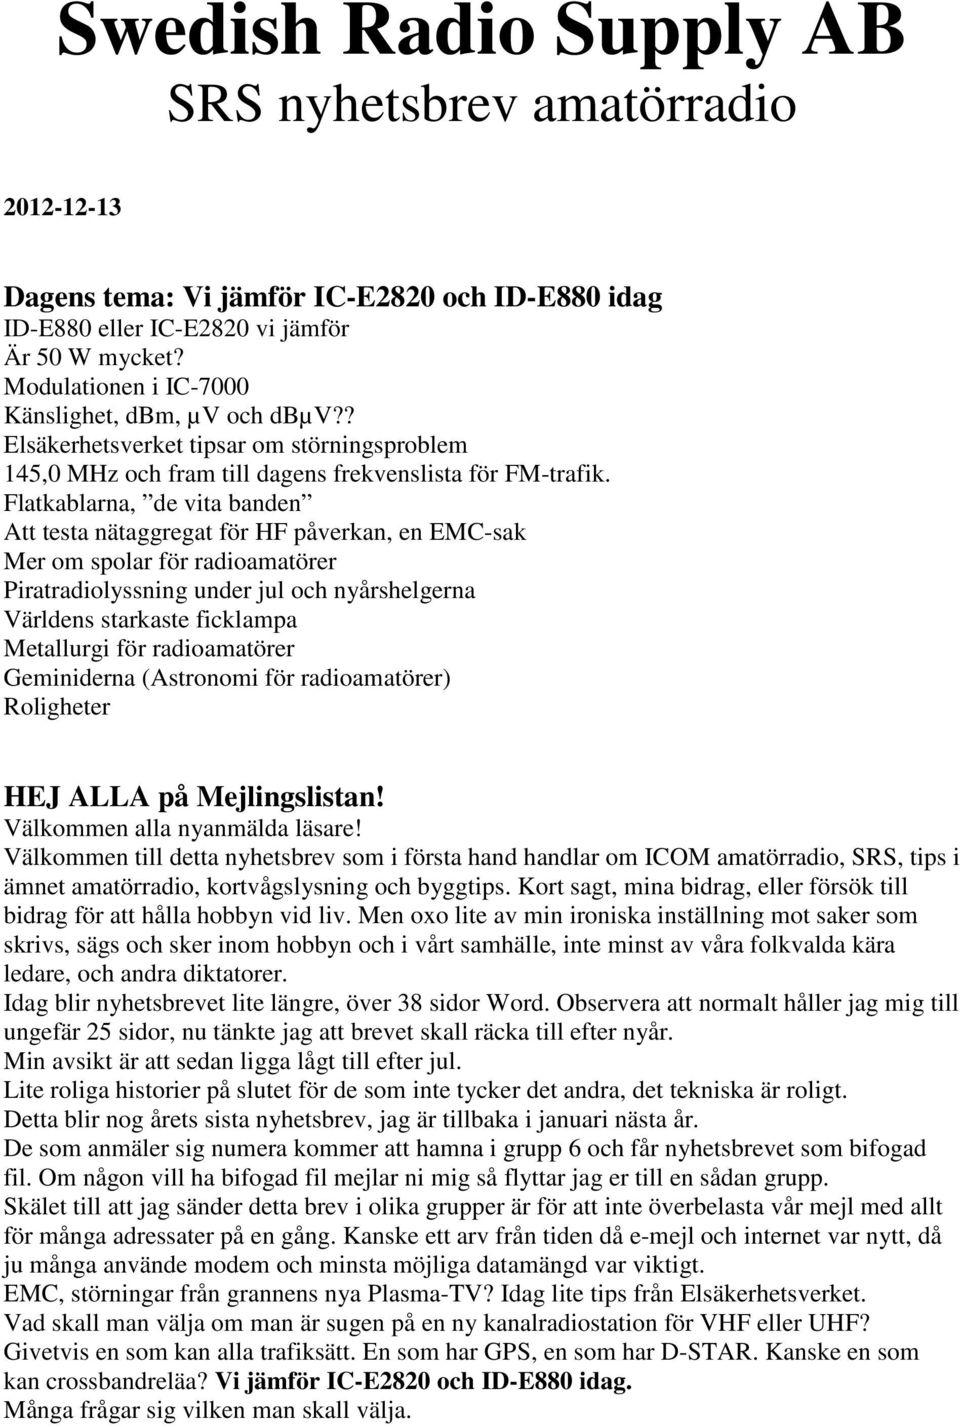 Swedish Radio Supply AB SRS nyhetsbrev amatörradio - PDF Gratis ...